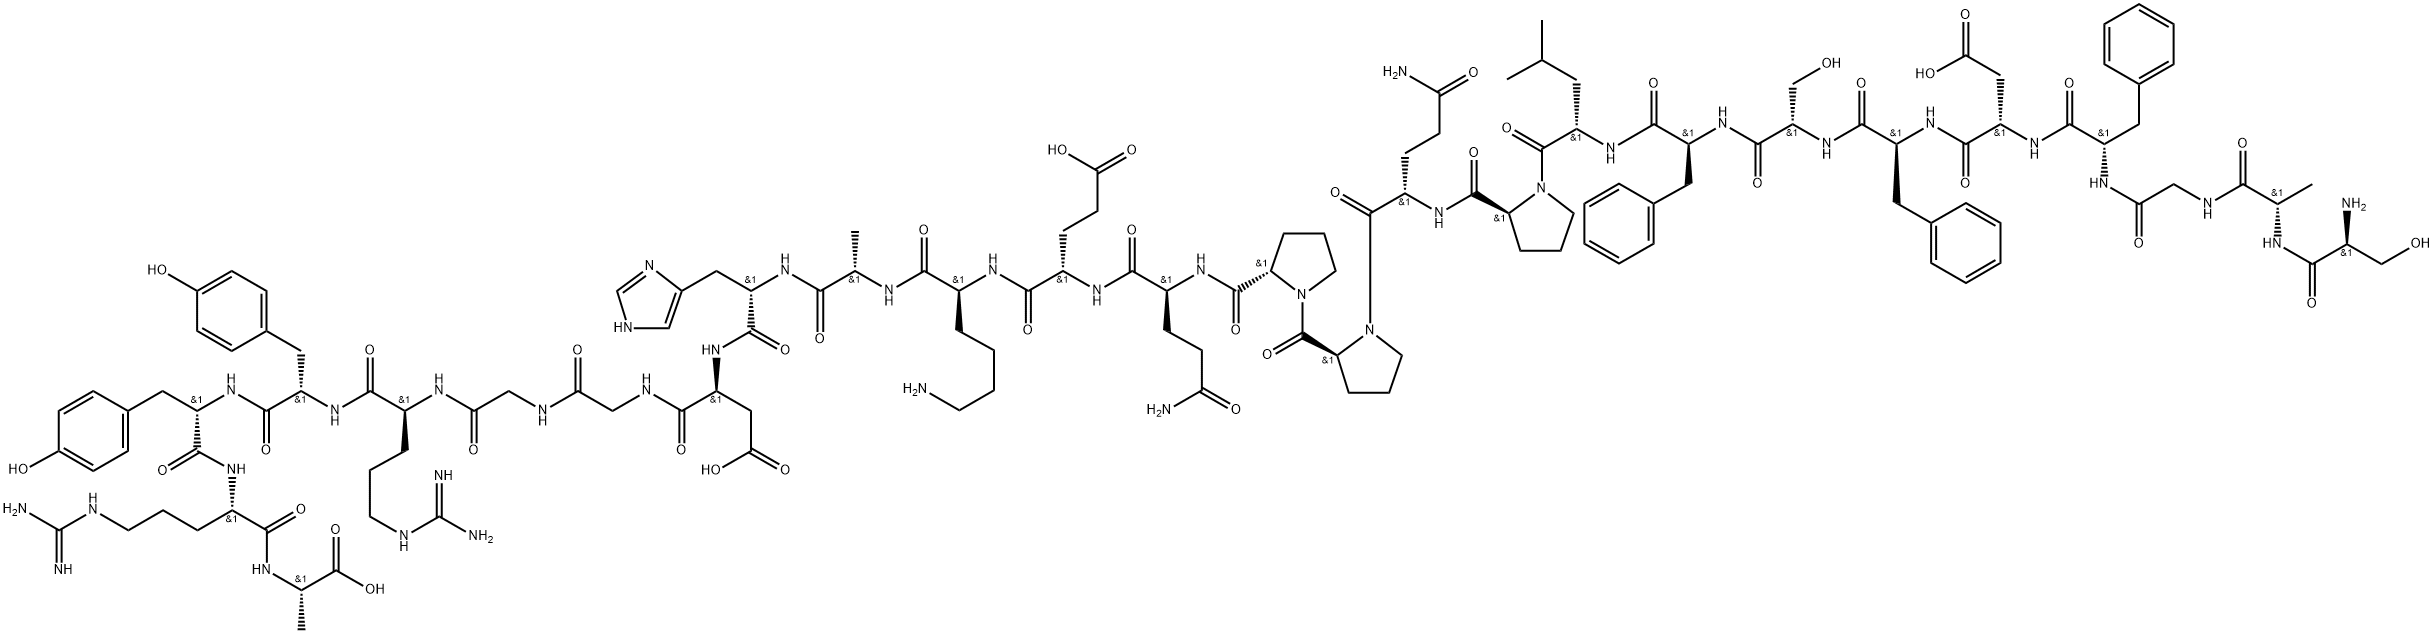 Alpha 1(I) Collagen (614-639), human 化学構造式